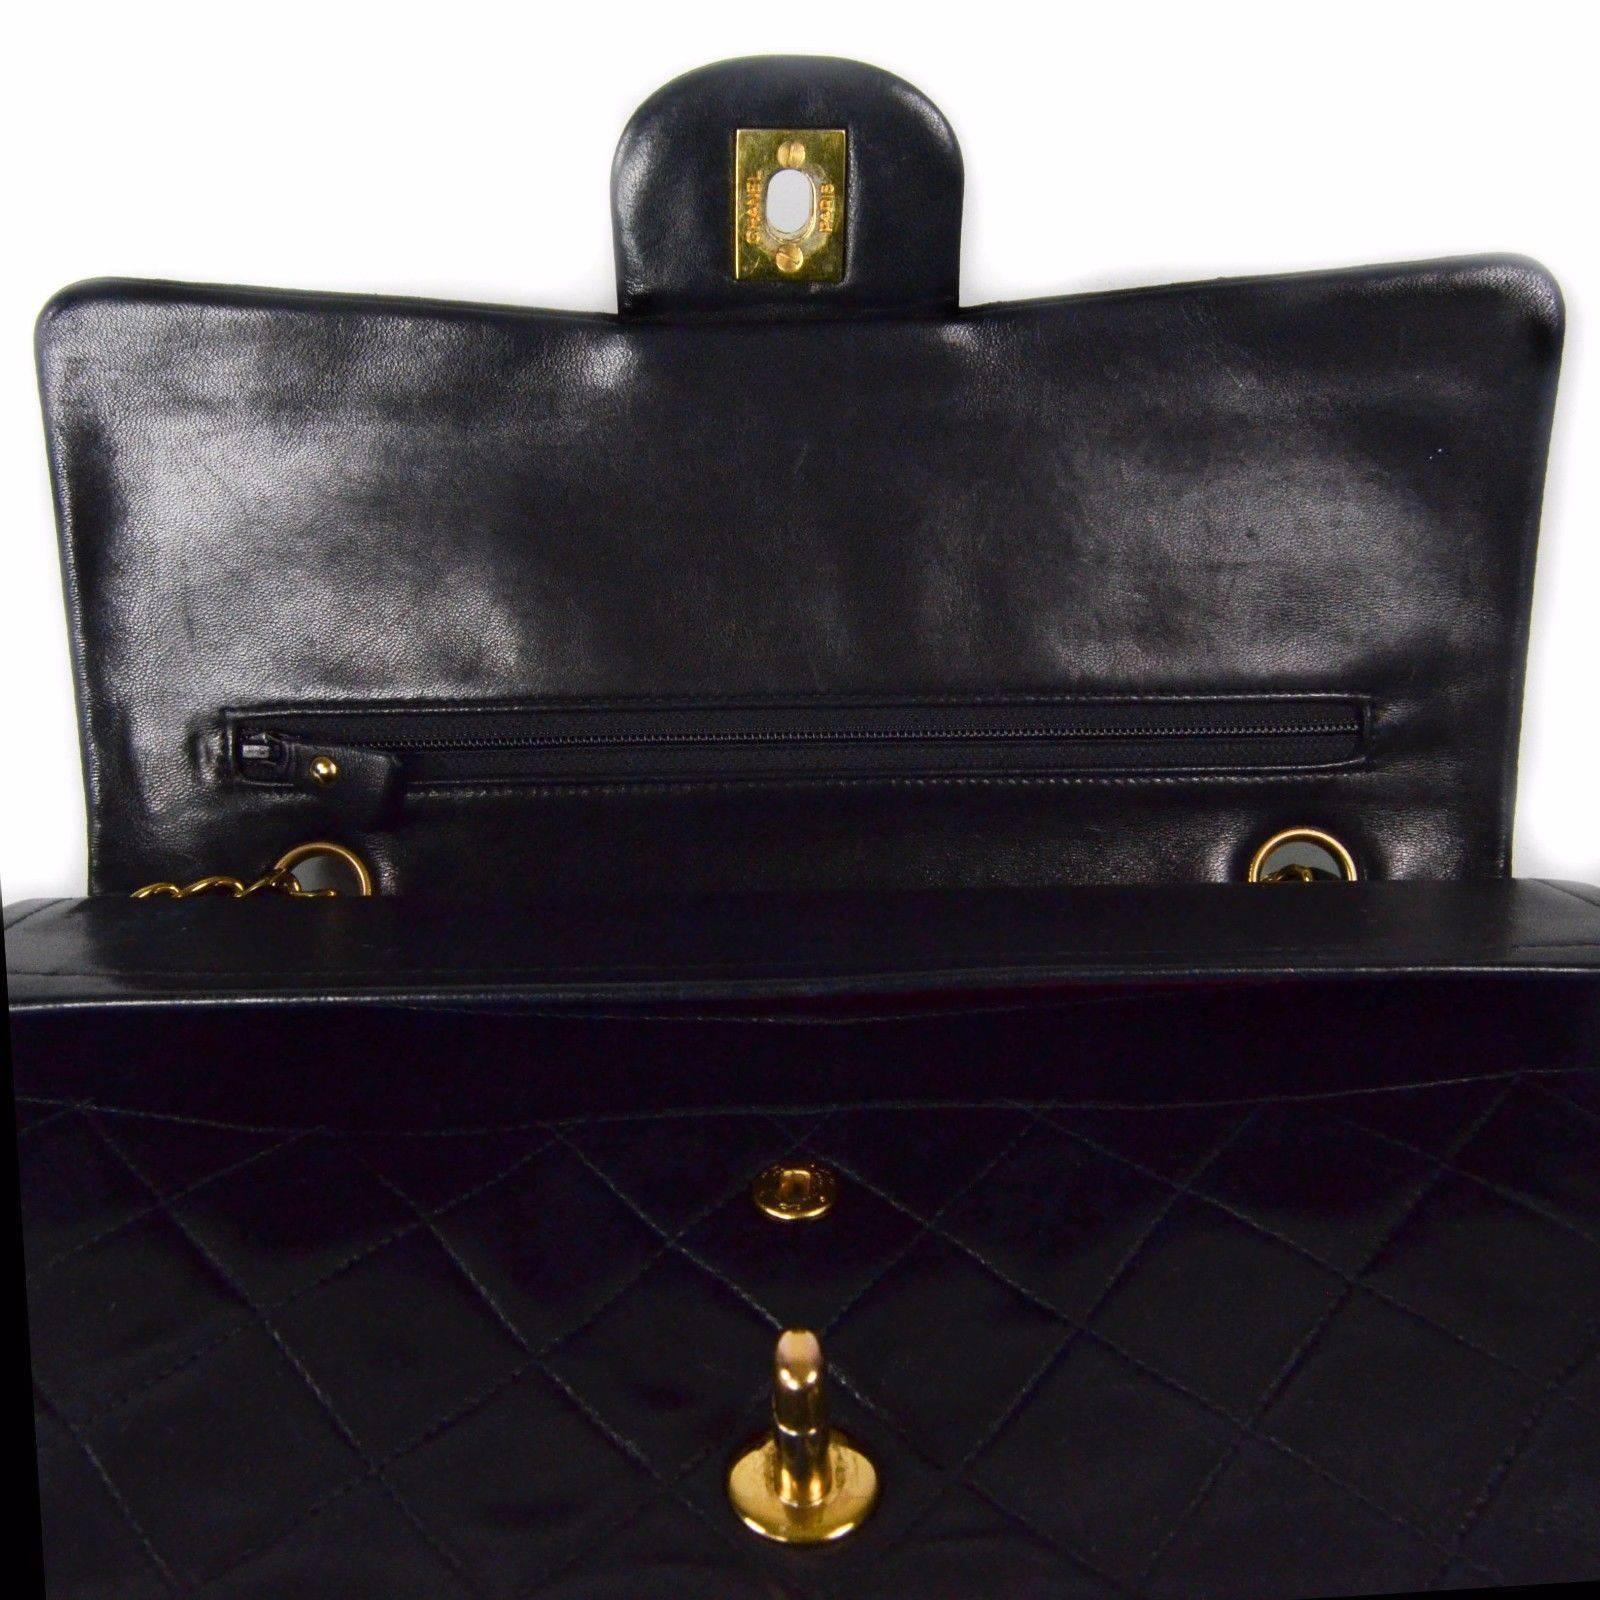 Chanel Medium Black Leather Bag - Quilted Double Flap CC Gold Shoulder Handbag 2